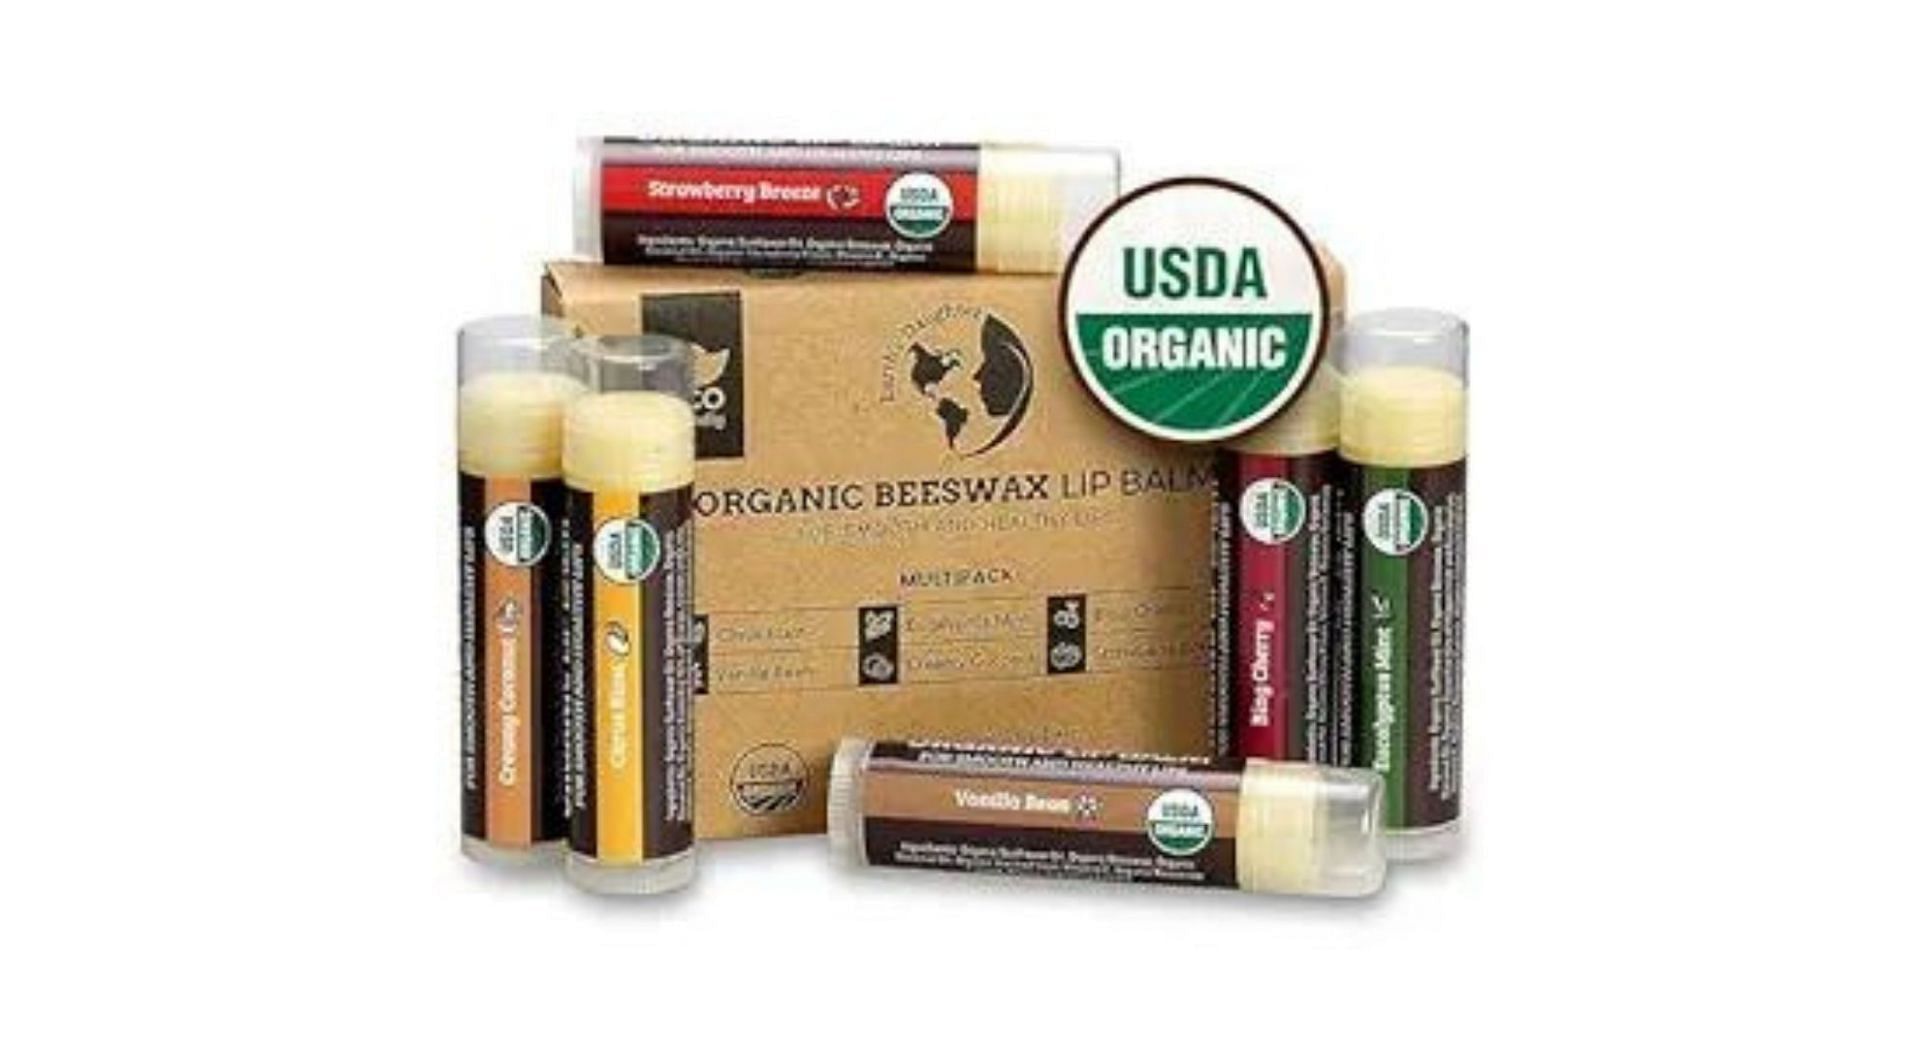 USDA Organic Lip Balm by Earth&#039;s Daughter (Image via Amazon)